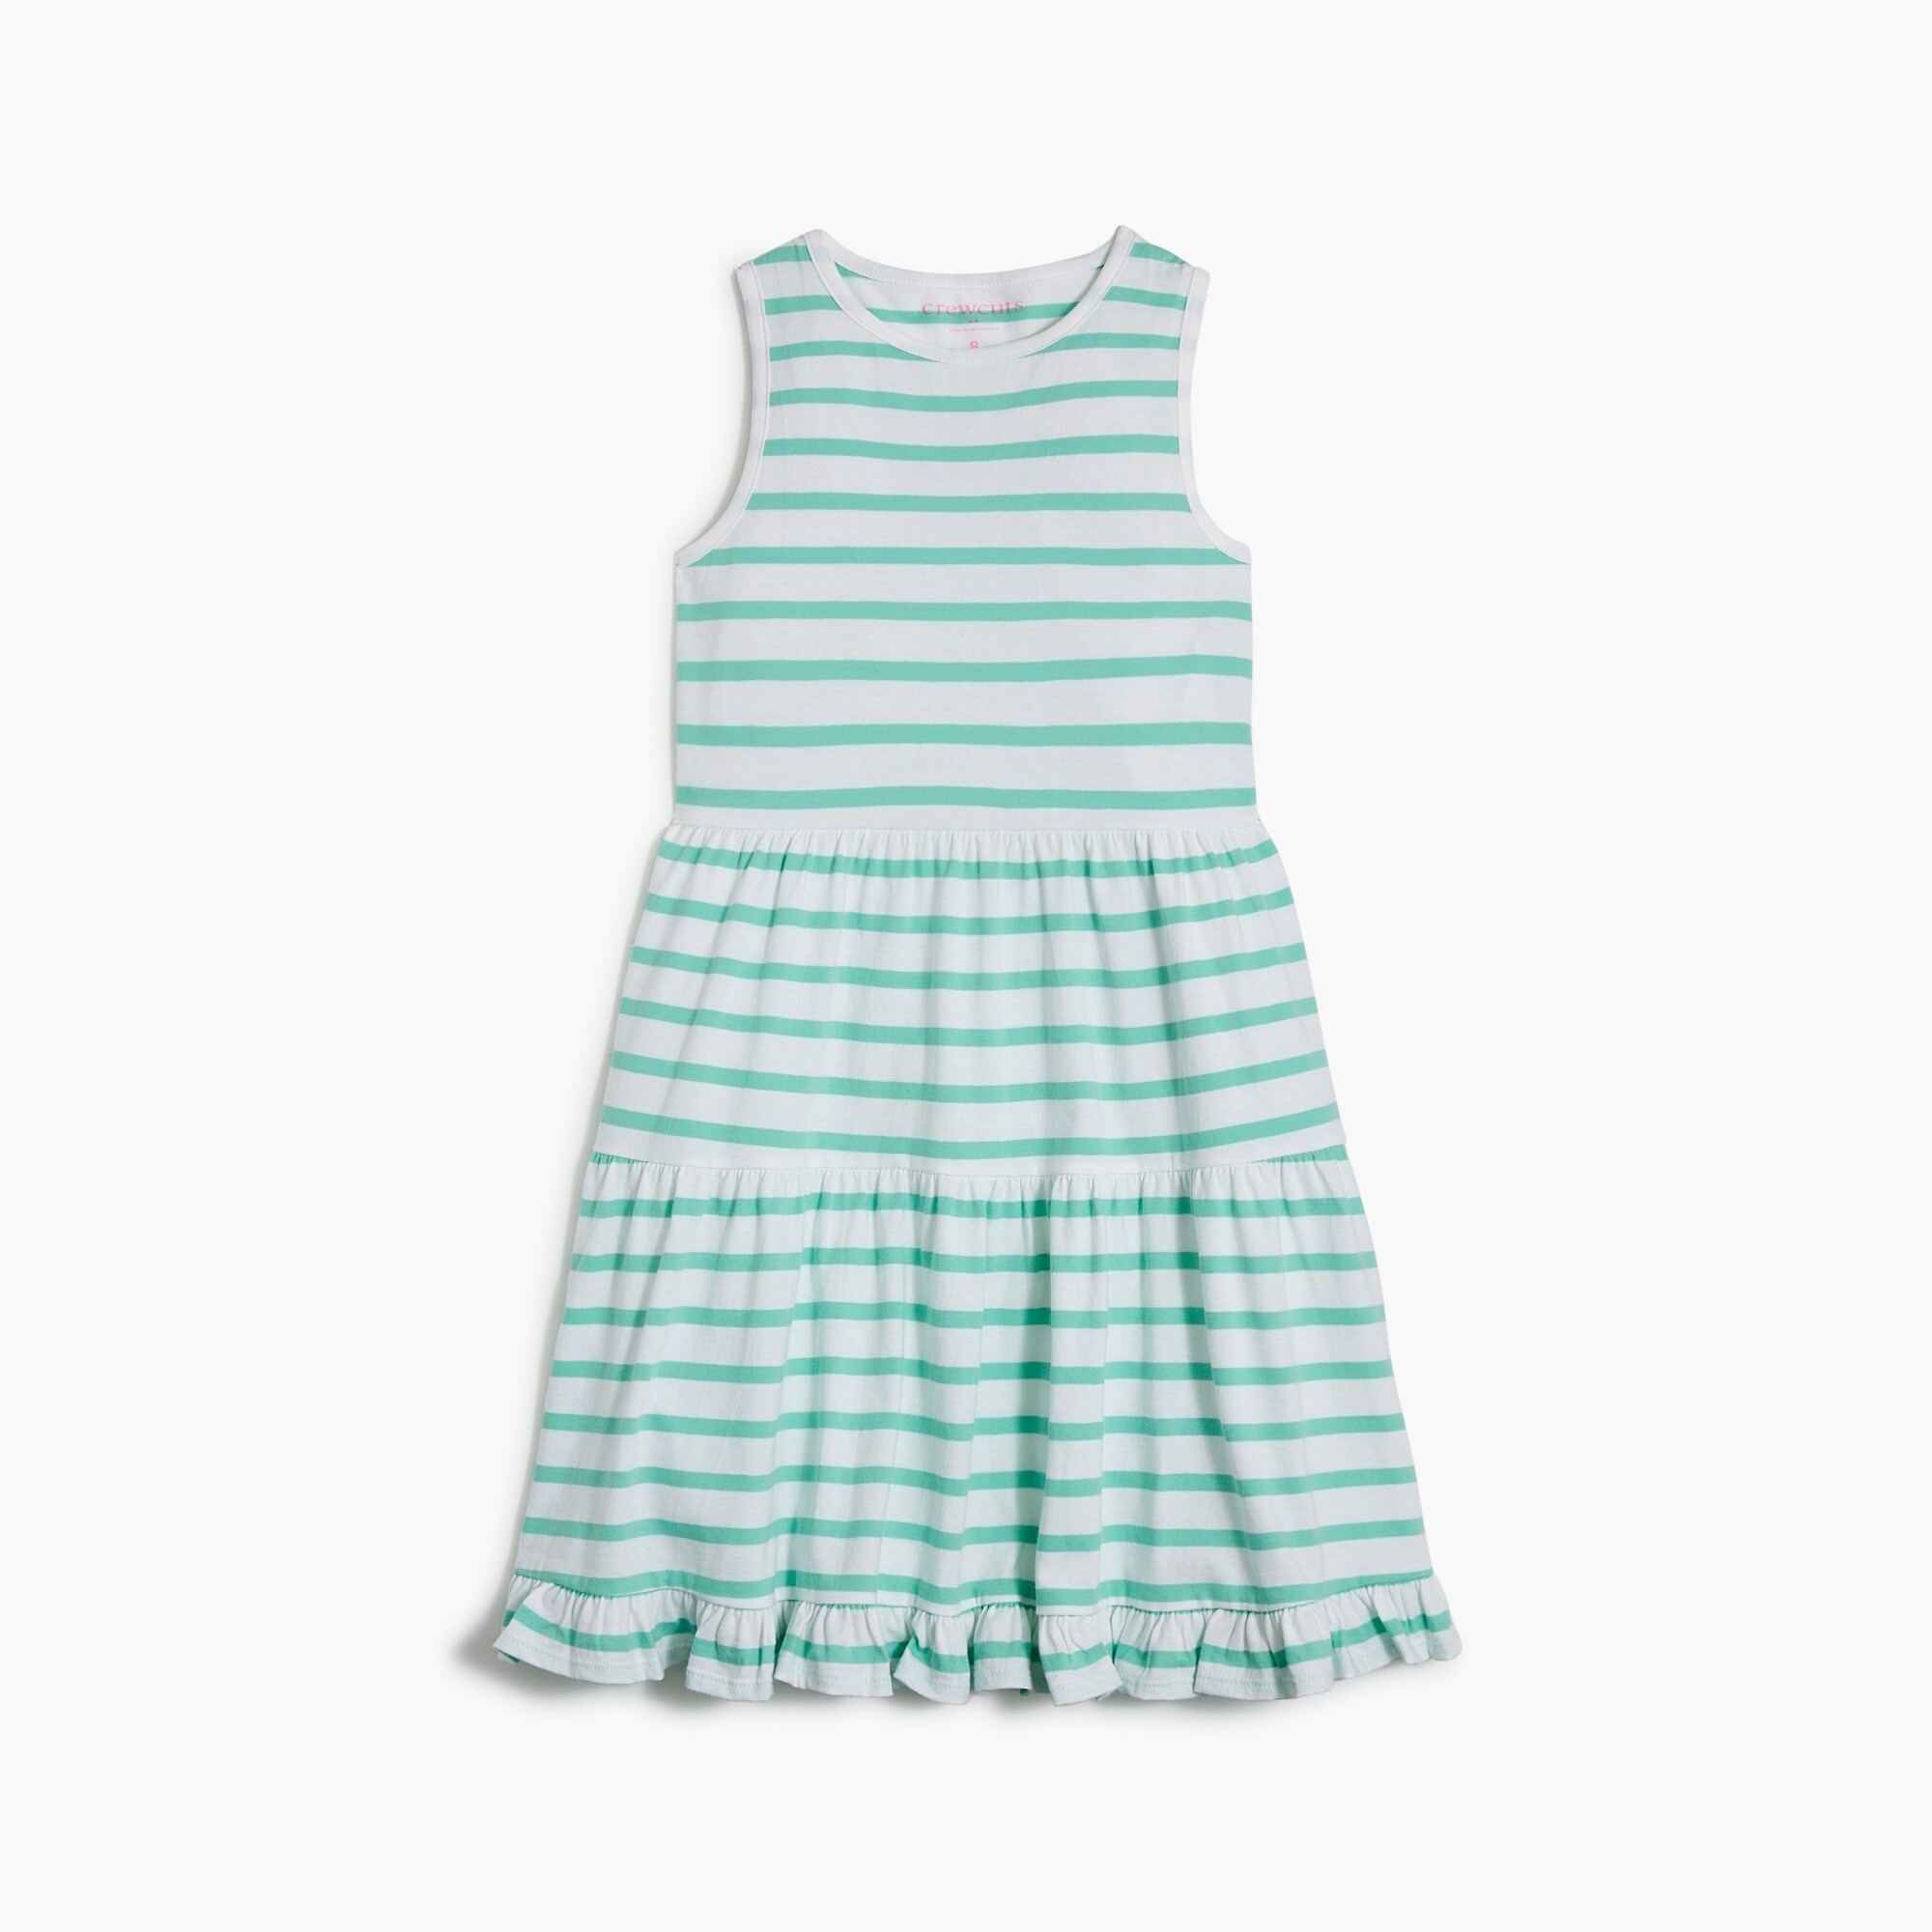  Girls' striped tank dress